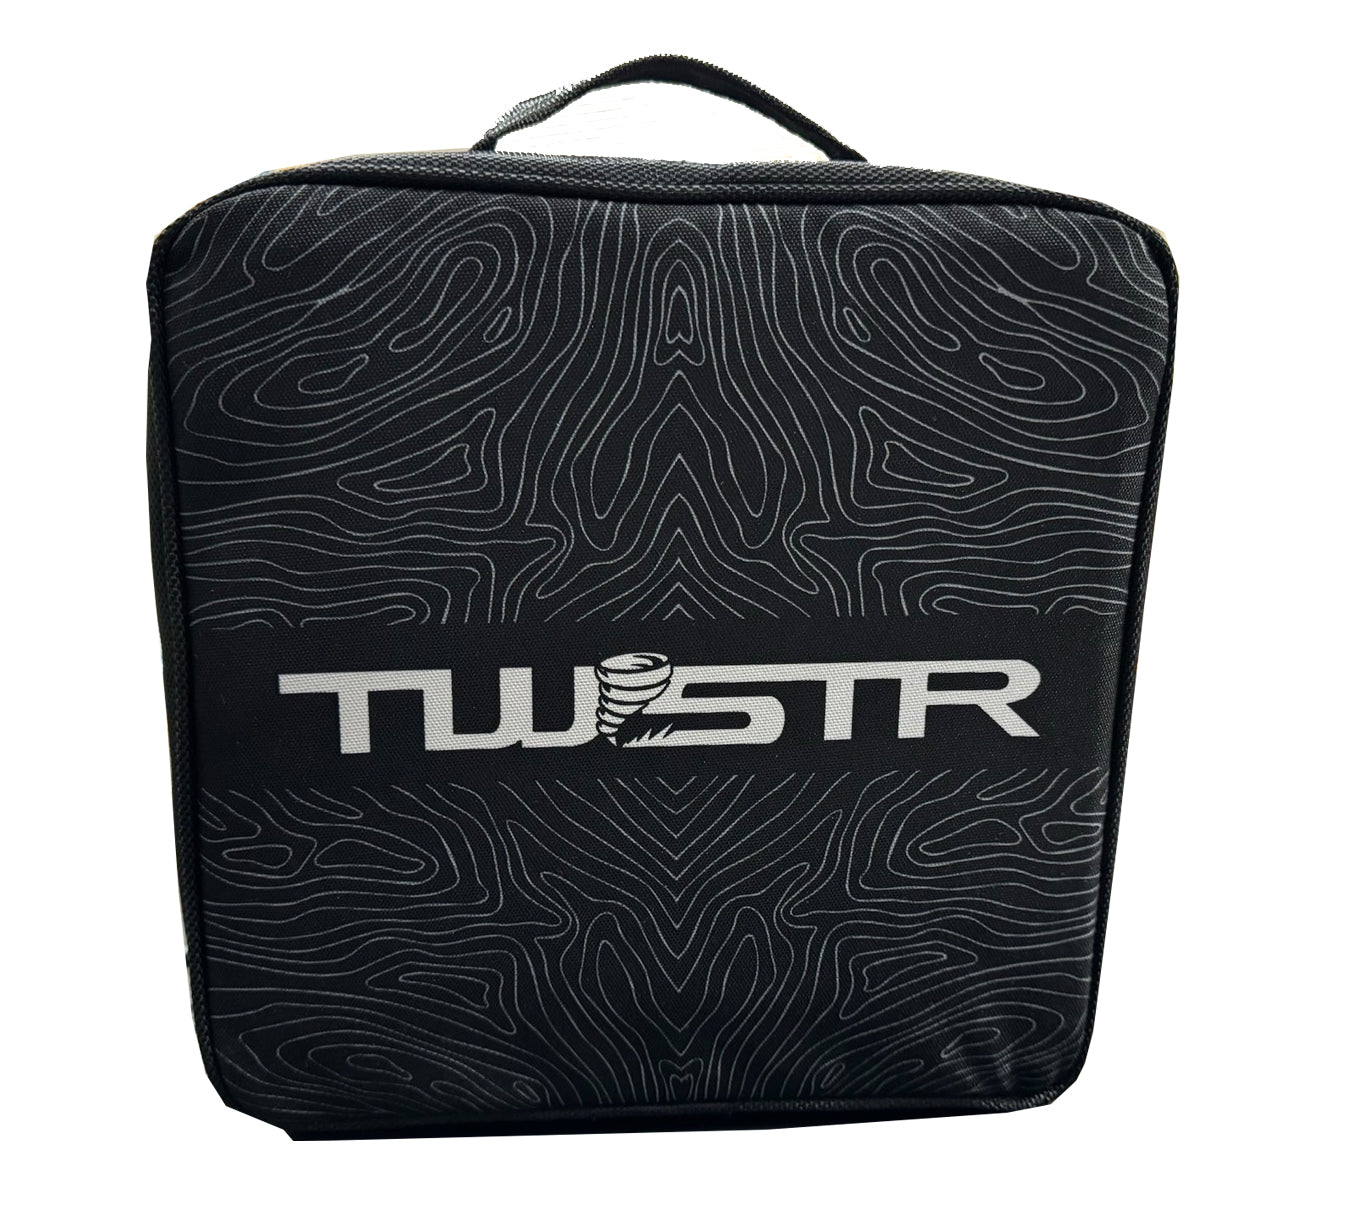 TWSTR x BK Loader Case - TWSTR Edition